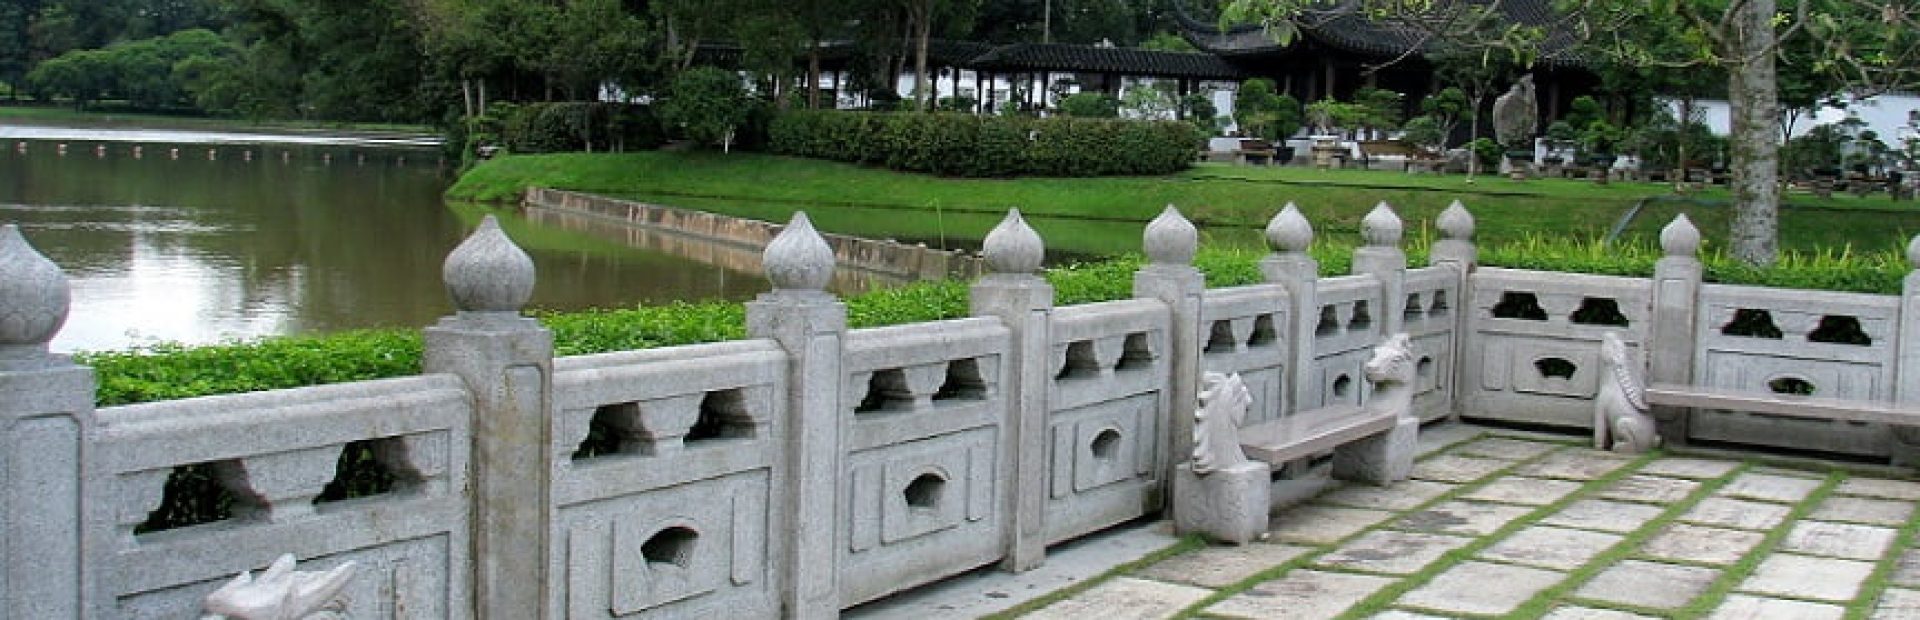 Singapore Chinese Garden